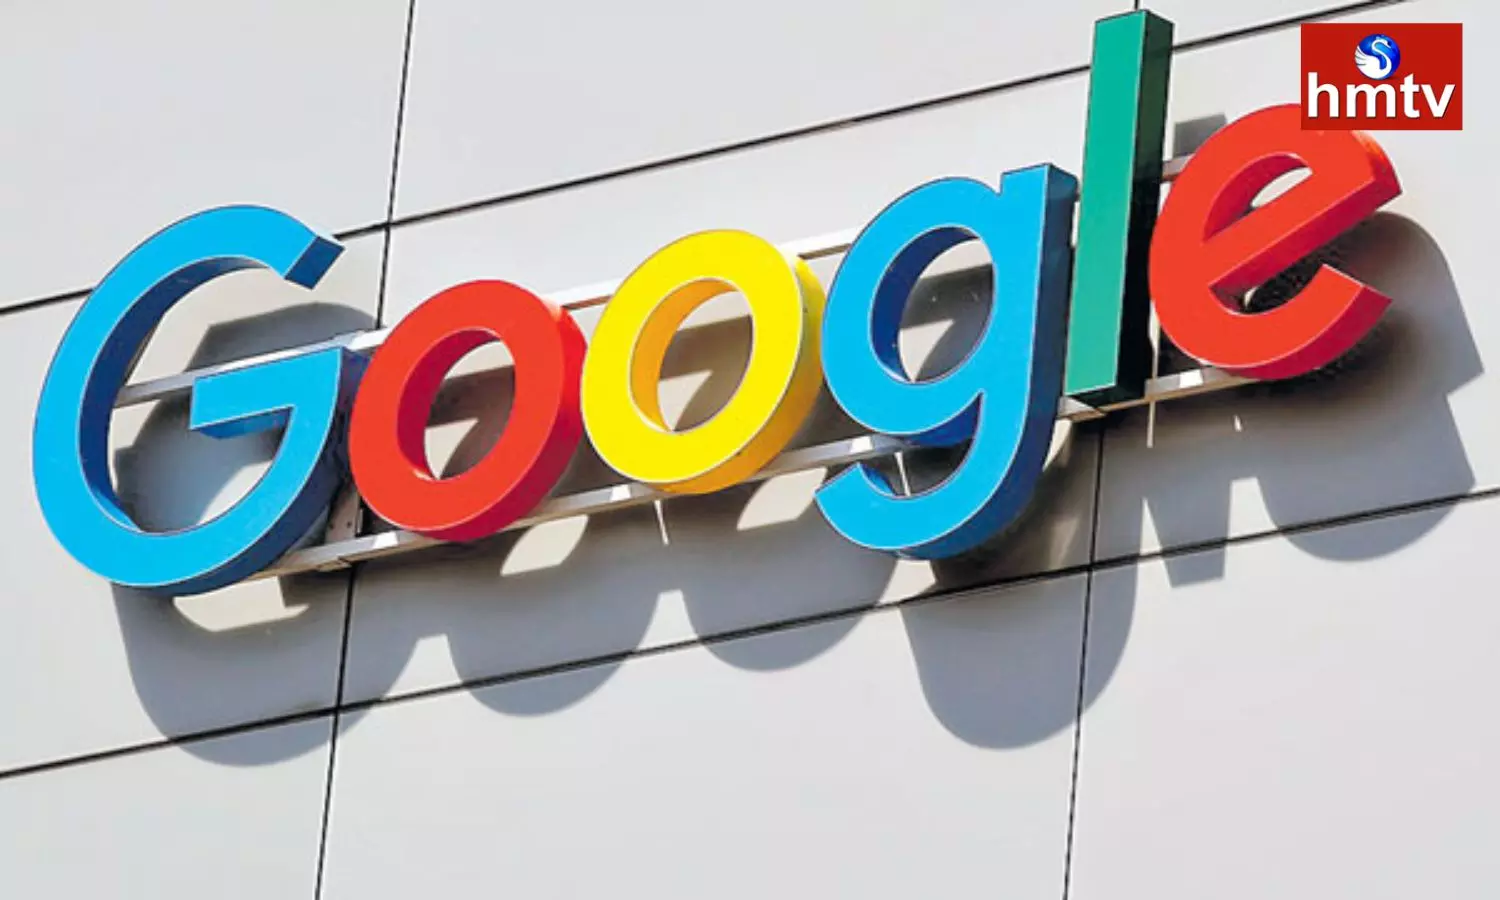 Googles parent company Alphabet plans to cut 10,000 jobs